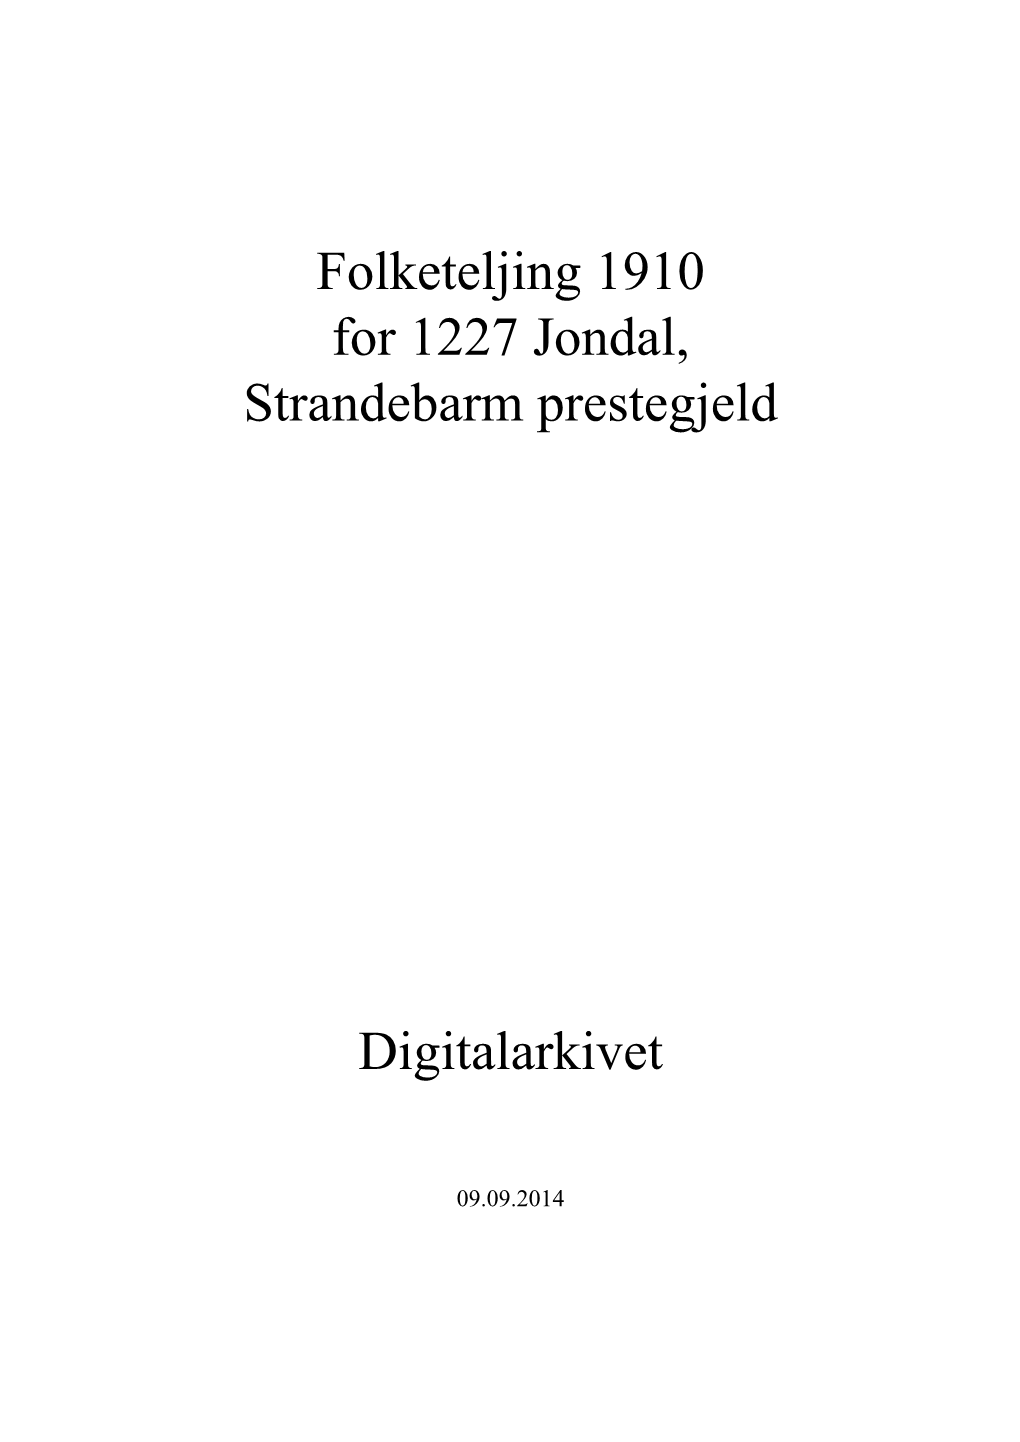 Folketeljing 1910 for 1227 Jondal, Strandebarm Prestegjeld